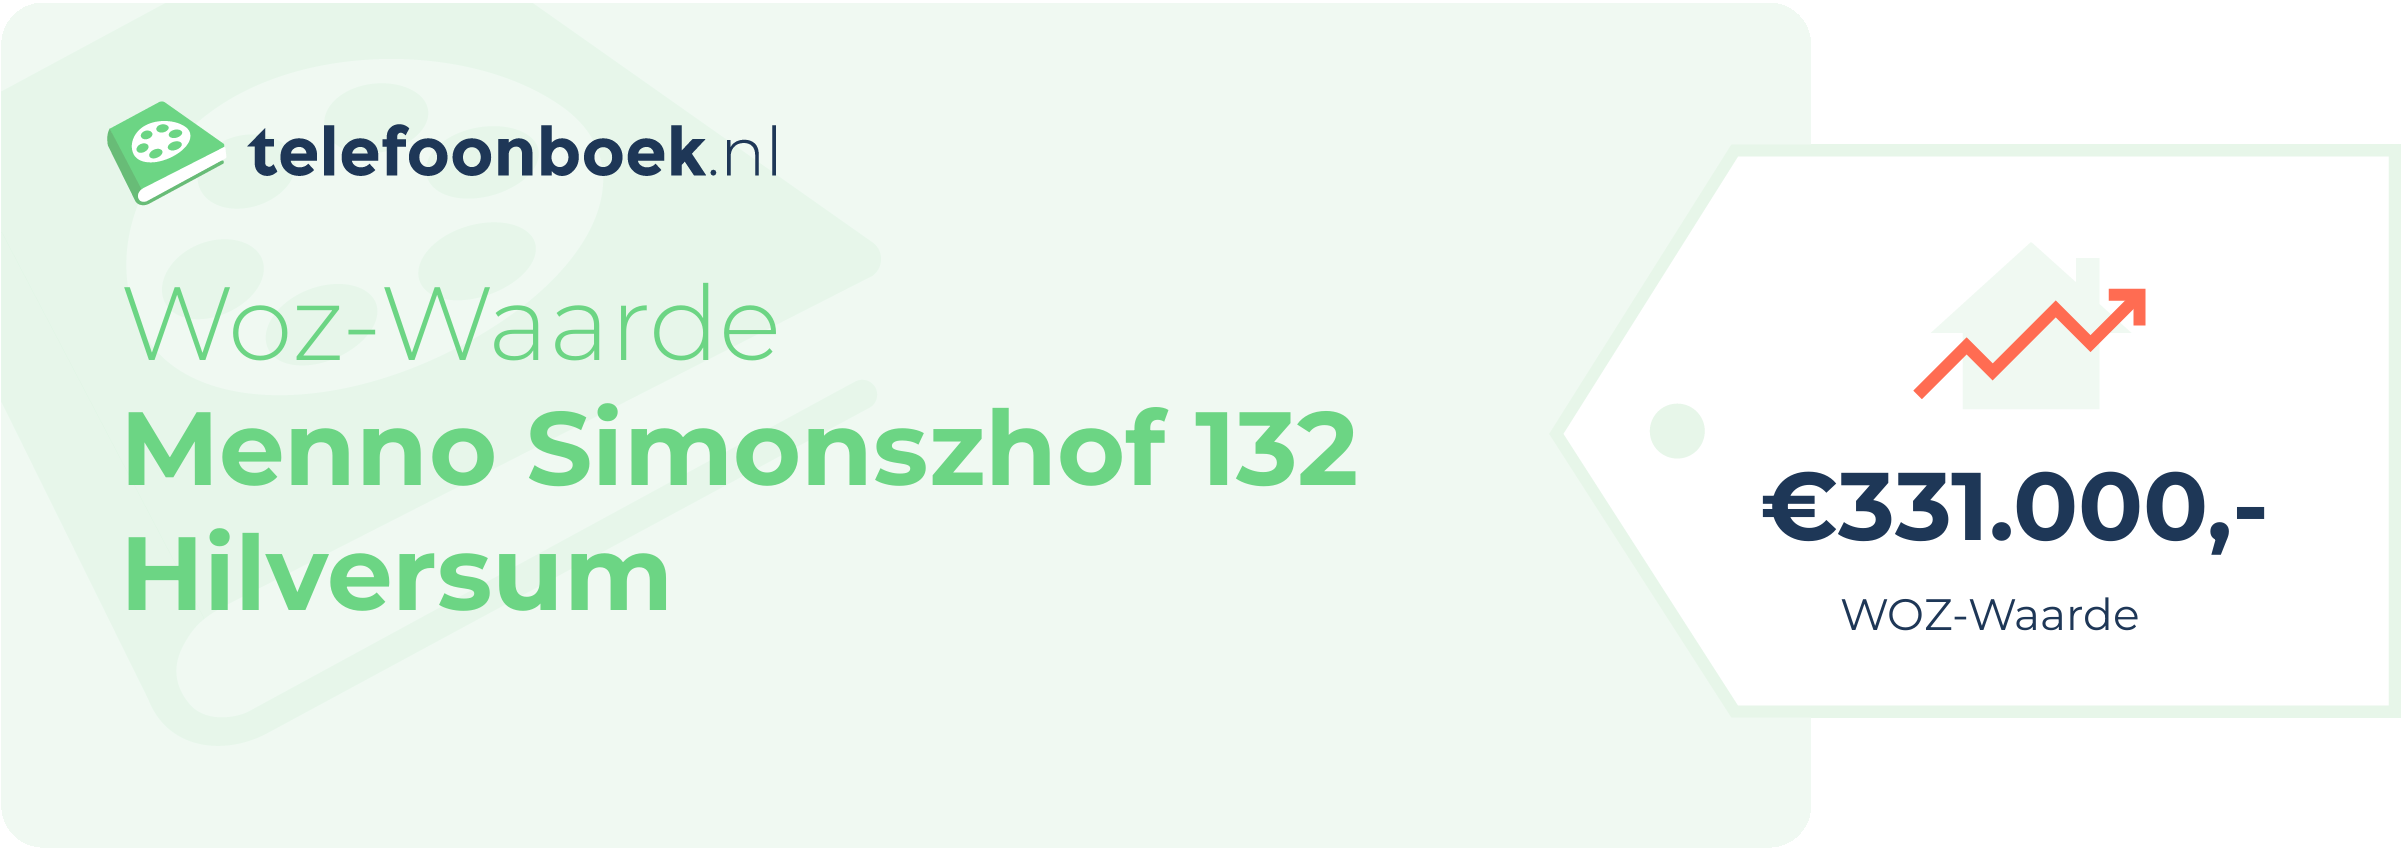 WOZ-waarde Menno Simonszhof 132 Hilversum